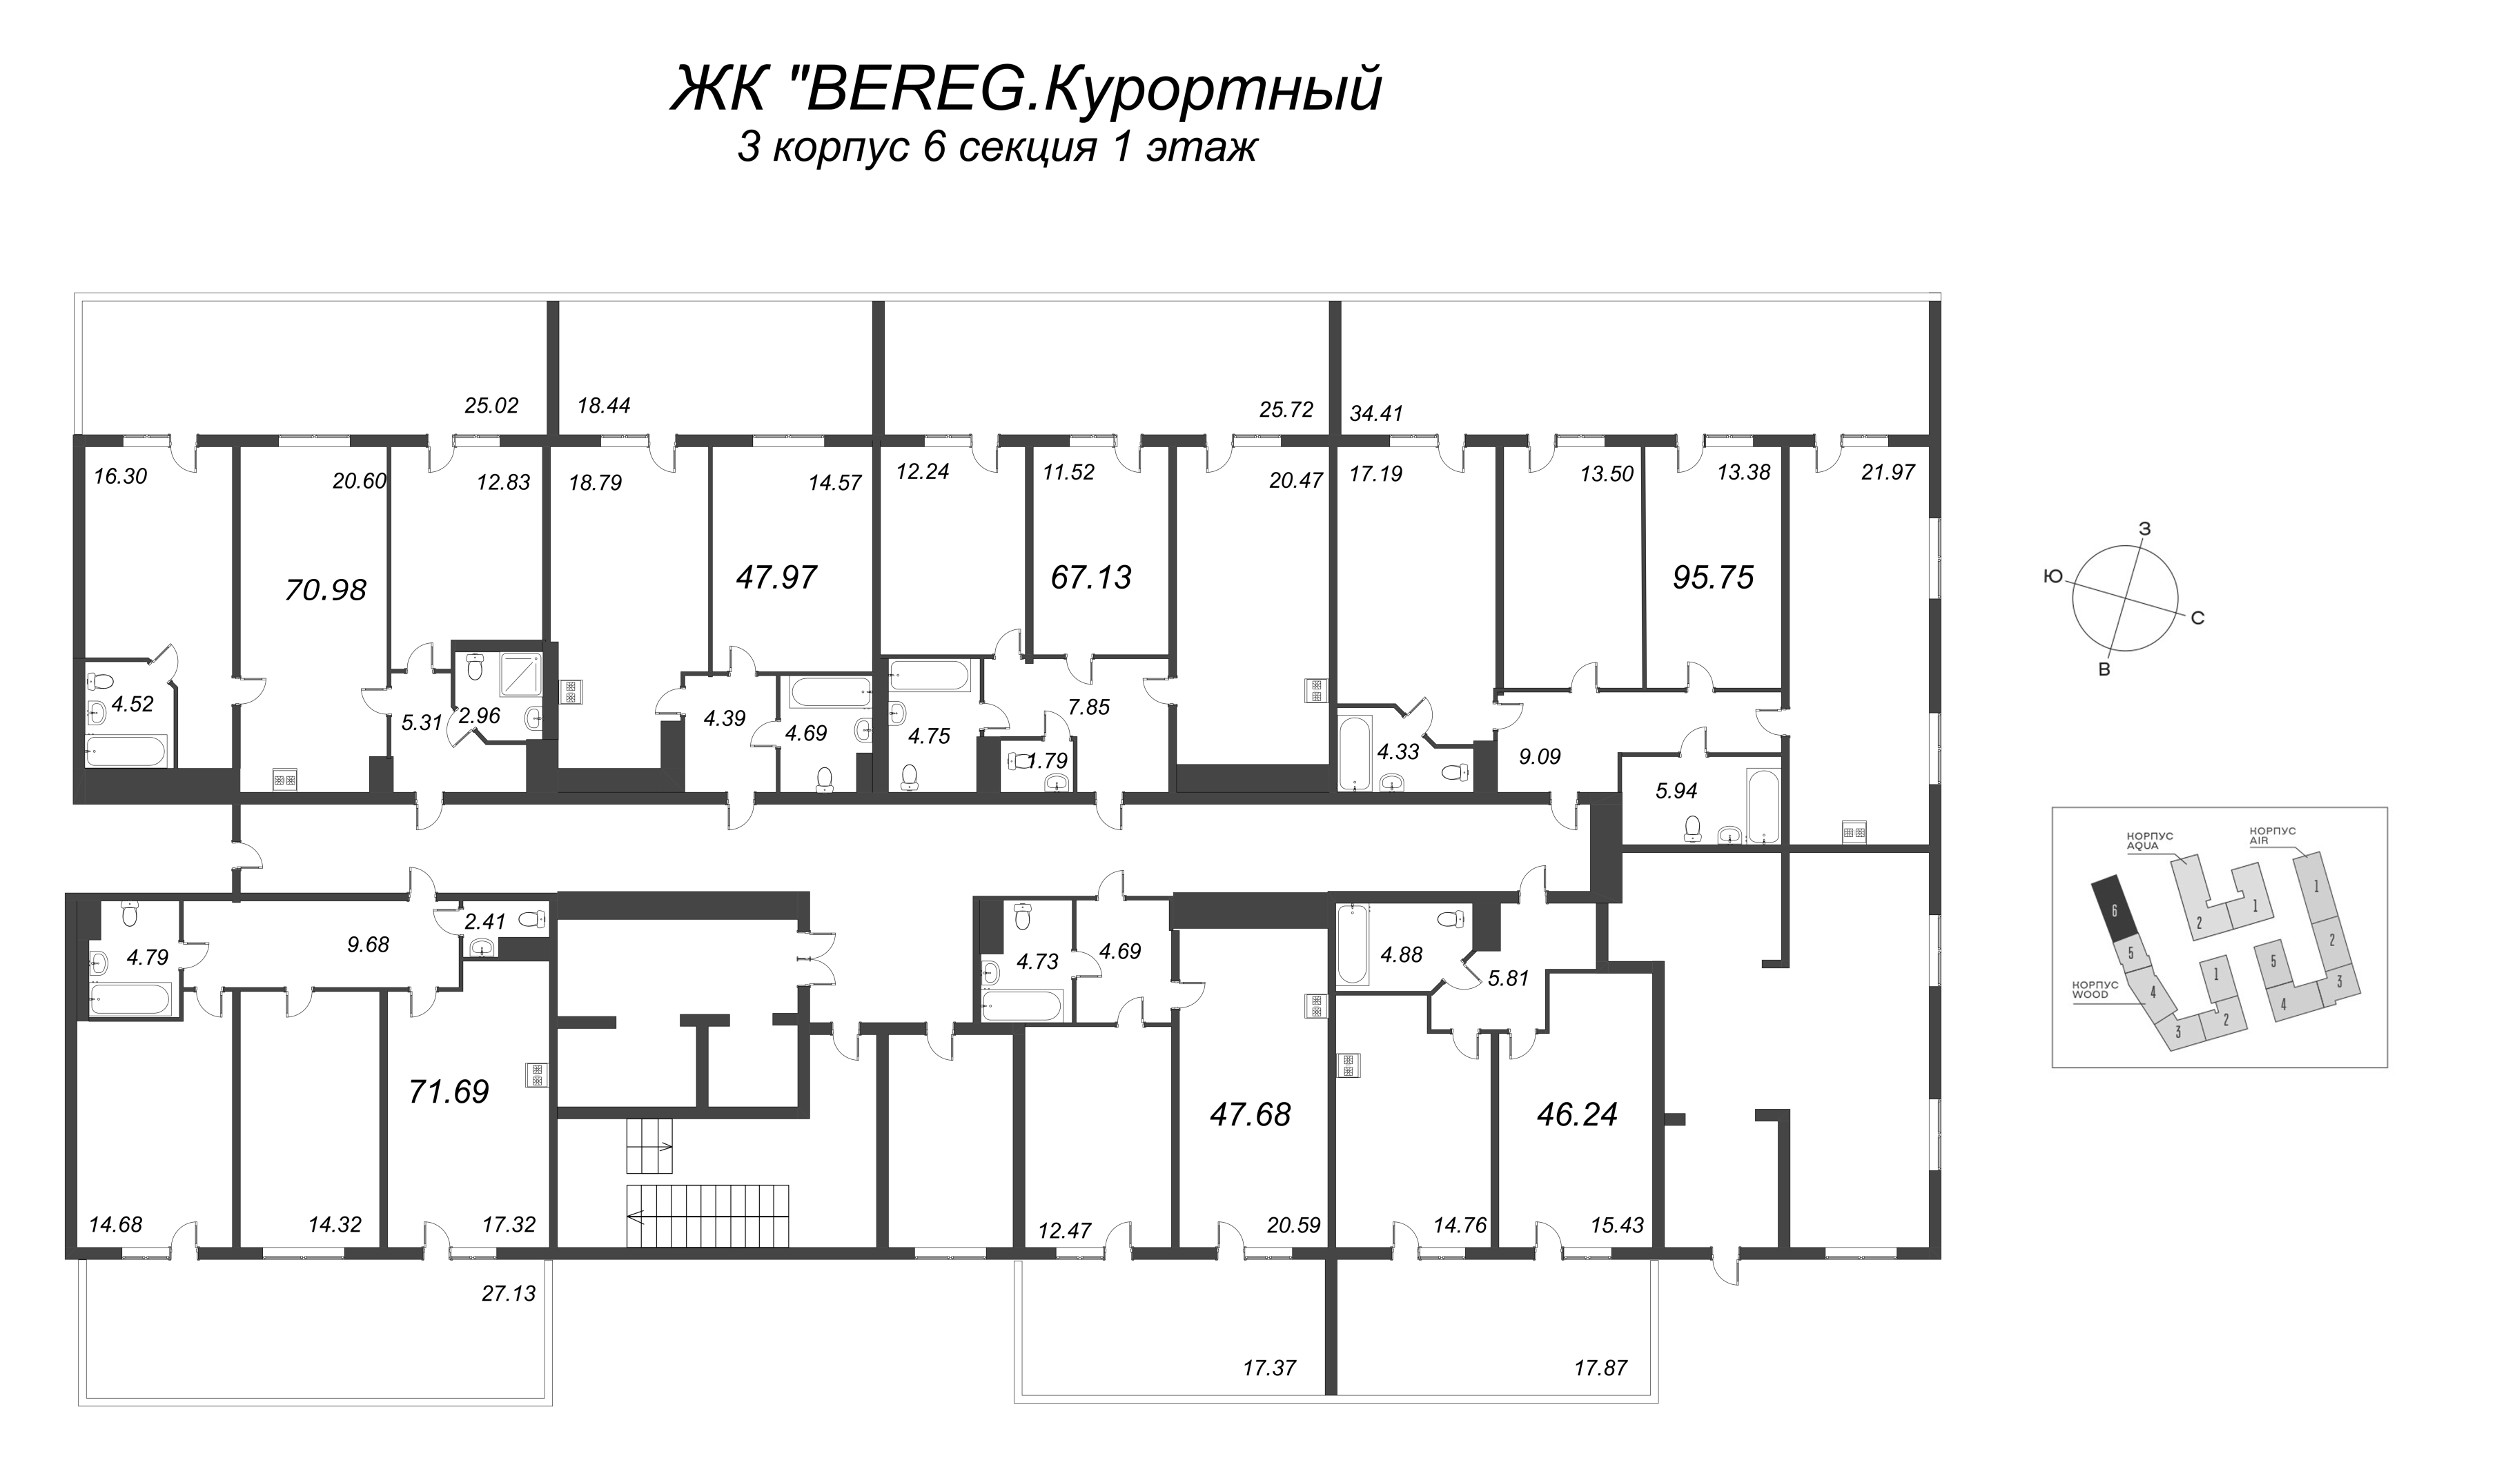 3-комнатная (Евро) квартира, 67.13 м² - планировка этажа